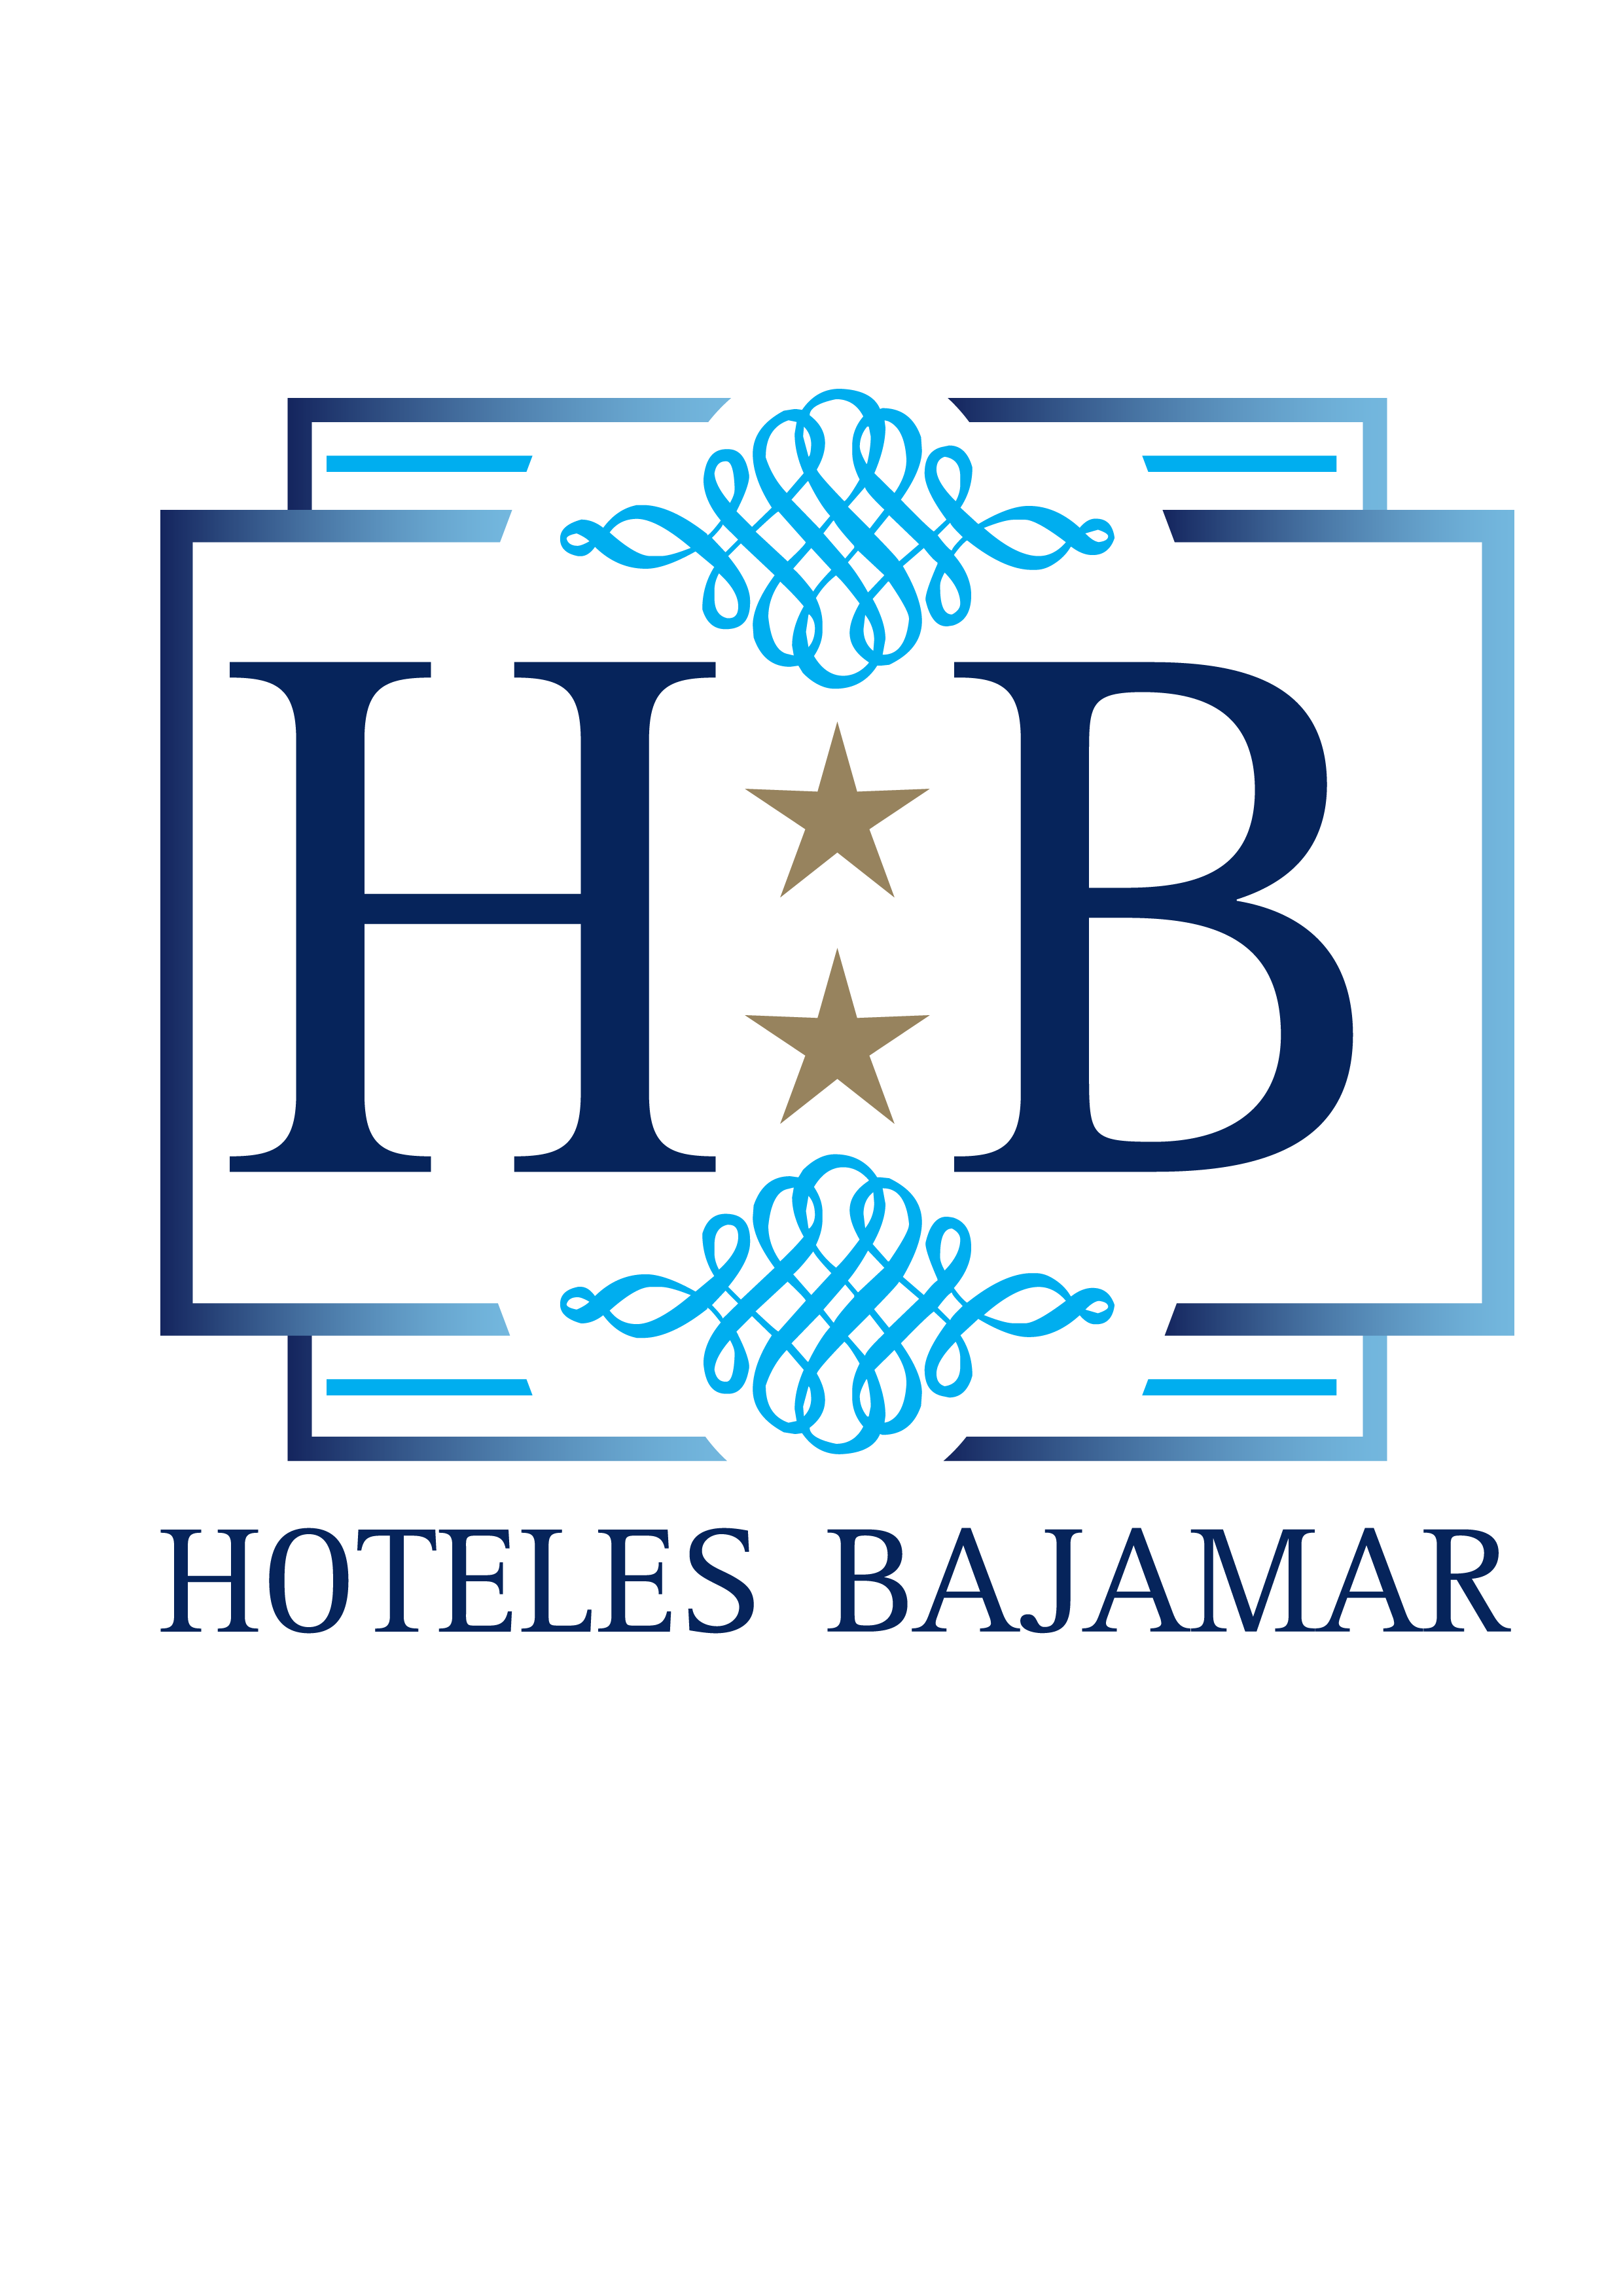 Bajamar Hoteles